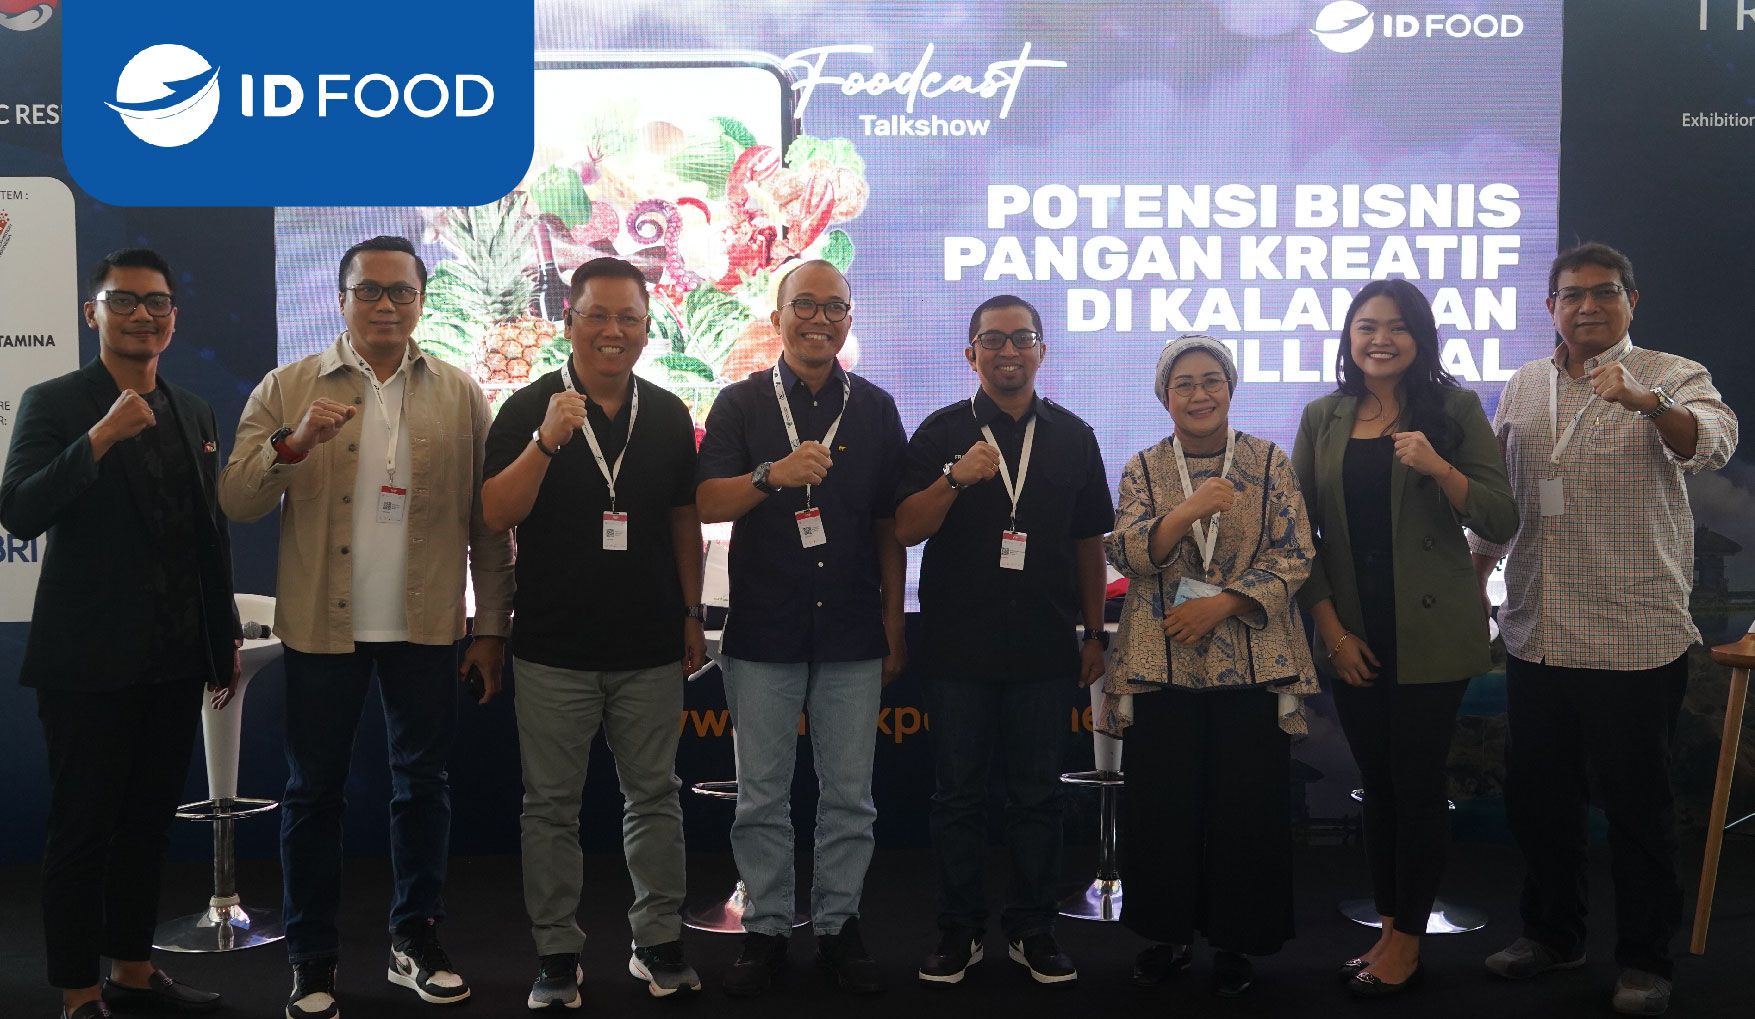 Foodcast ID FOOD di TEI 2023  Potensi Bisnis Pangan Kreatif Dikalangan Millennial  Peran Millennial Perkuat UMKM Pangan